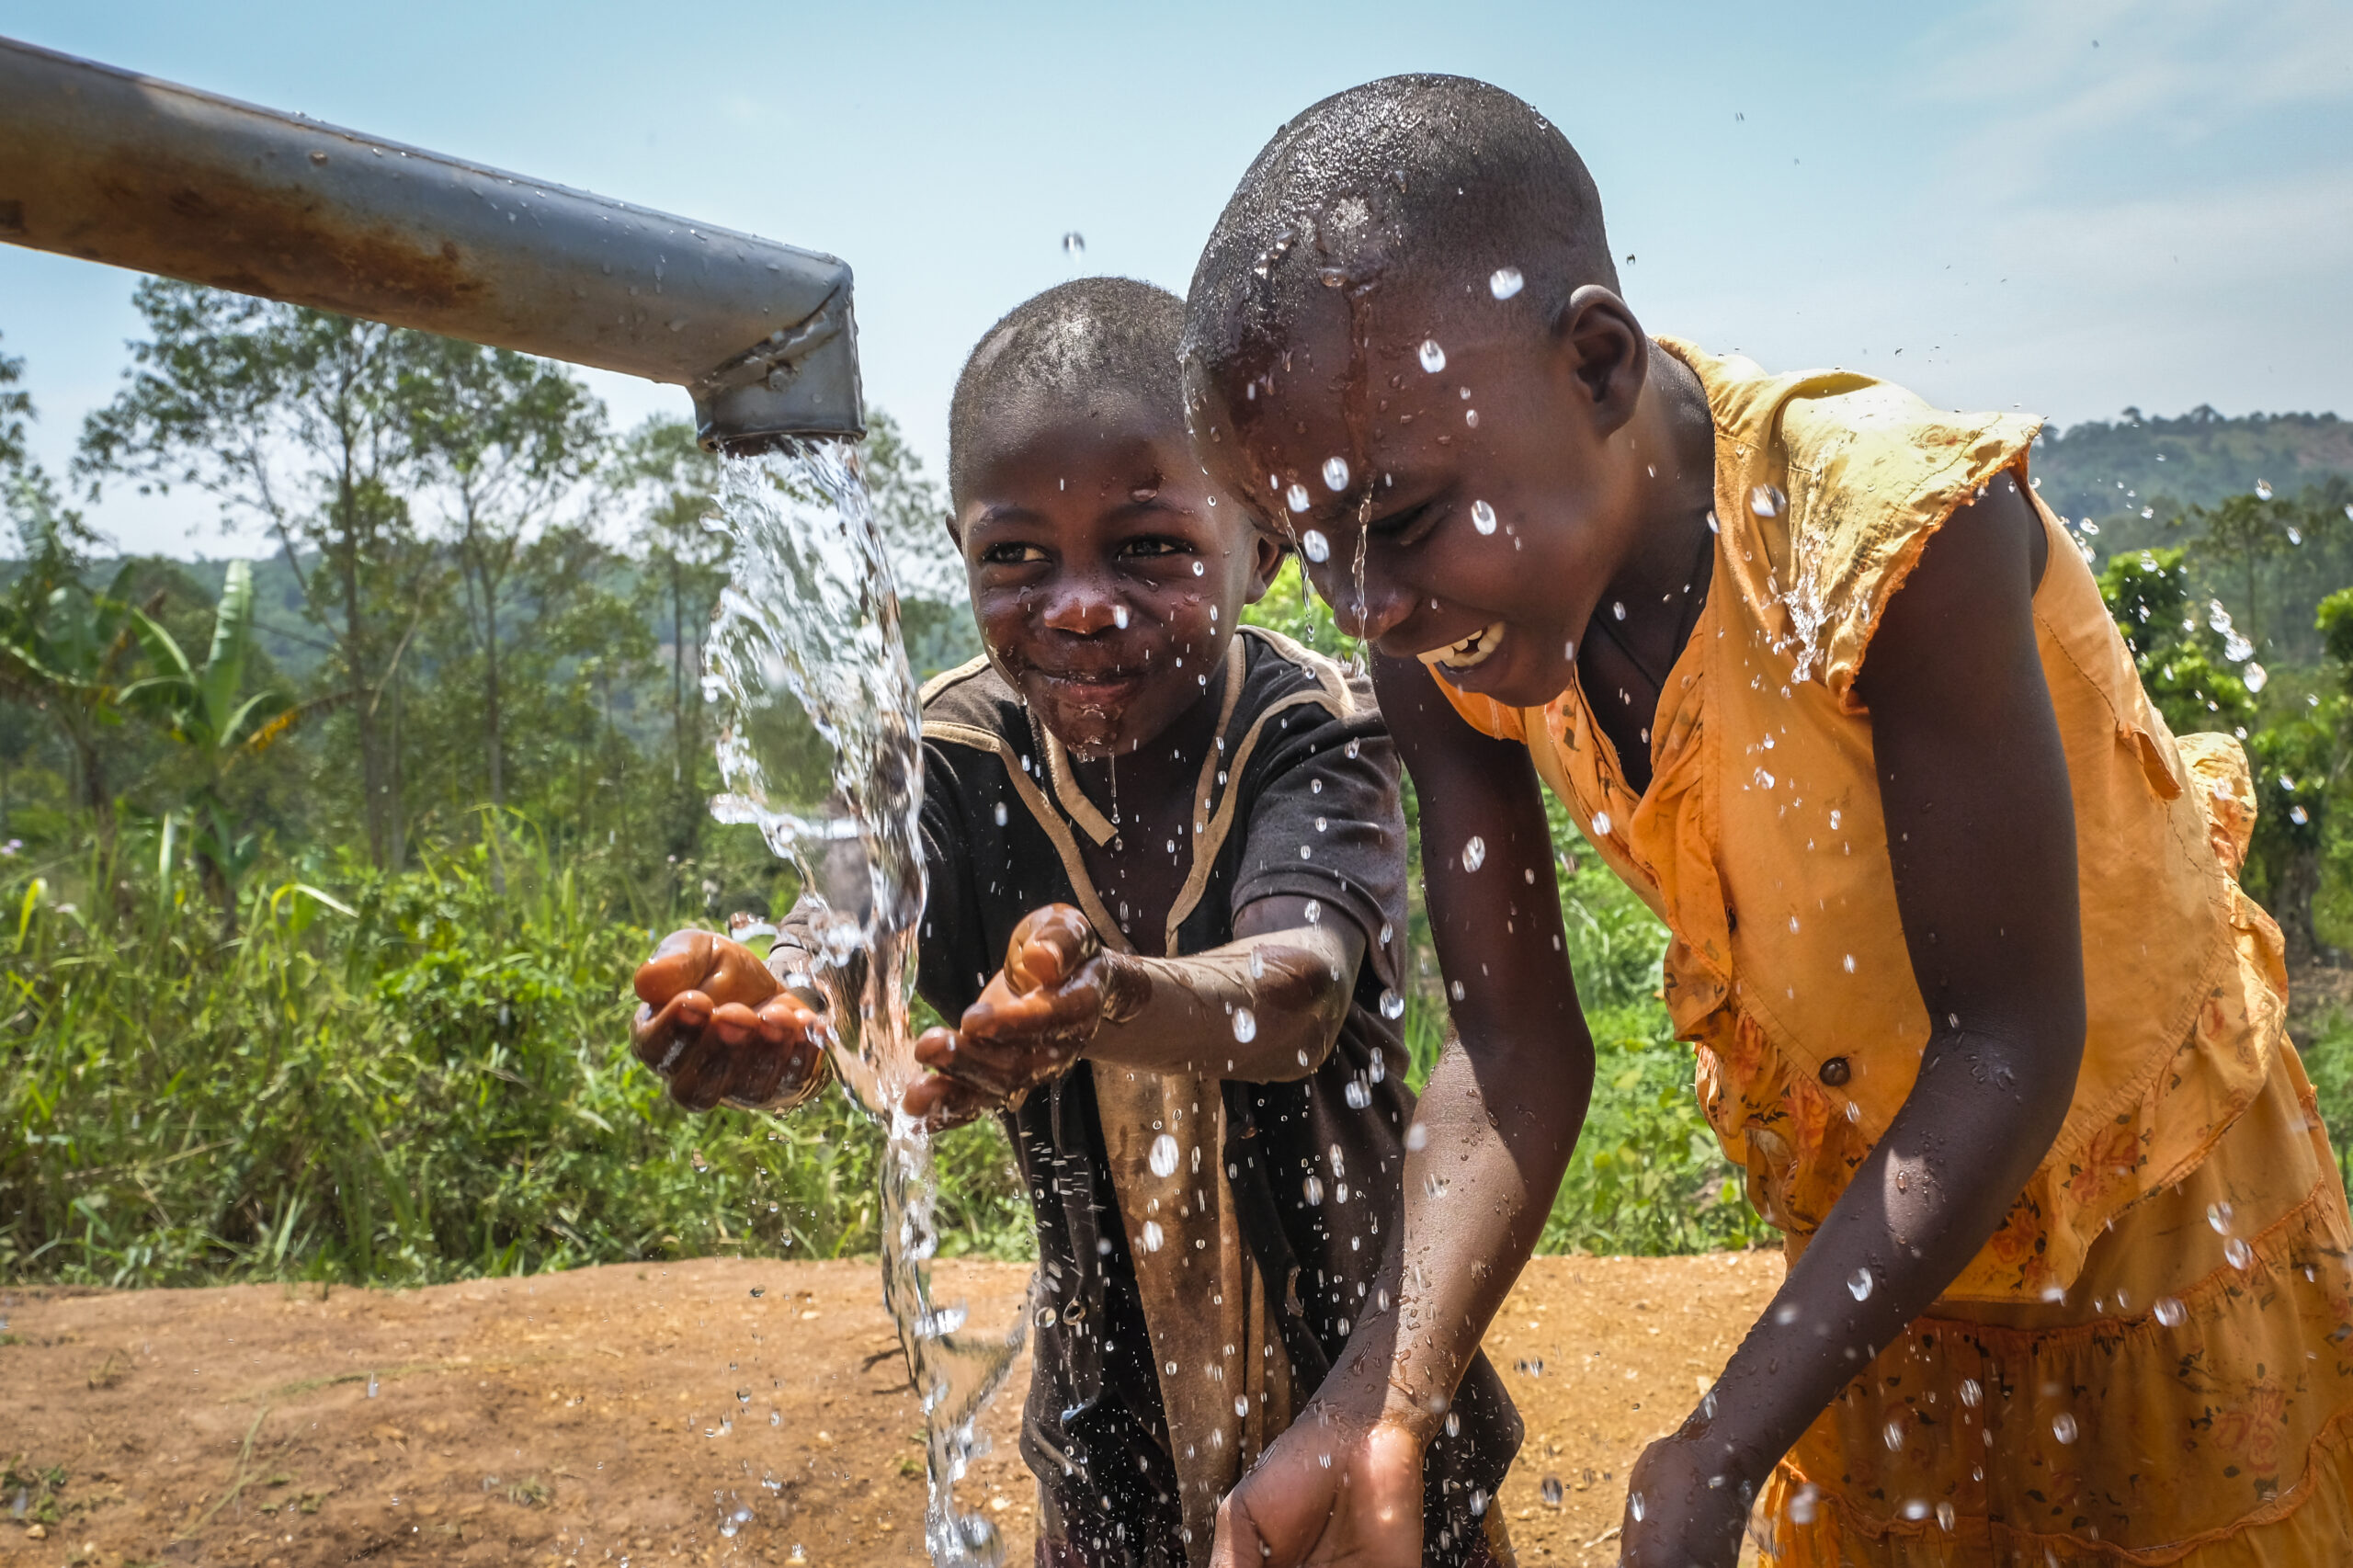 Having fun with water at the well in Lusera village, Mukono District - Uganda.